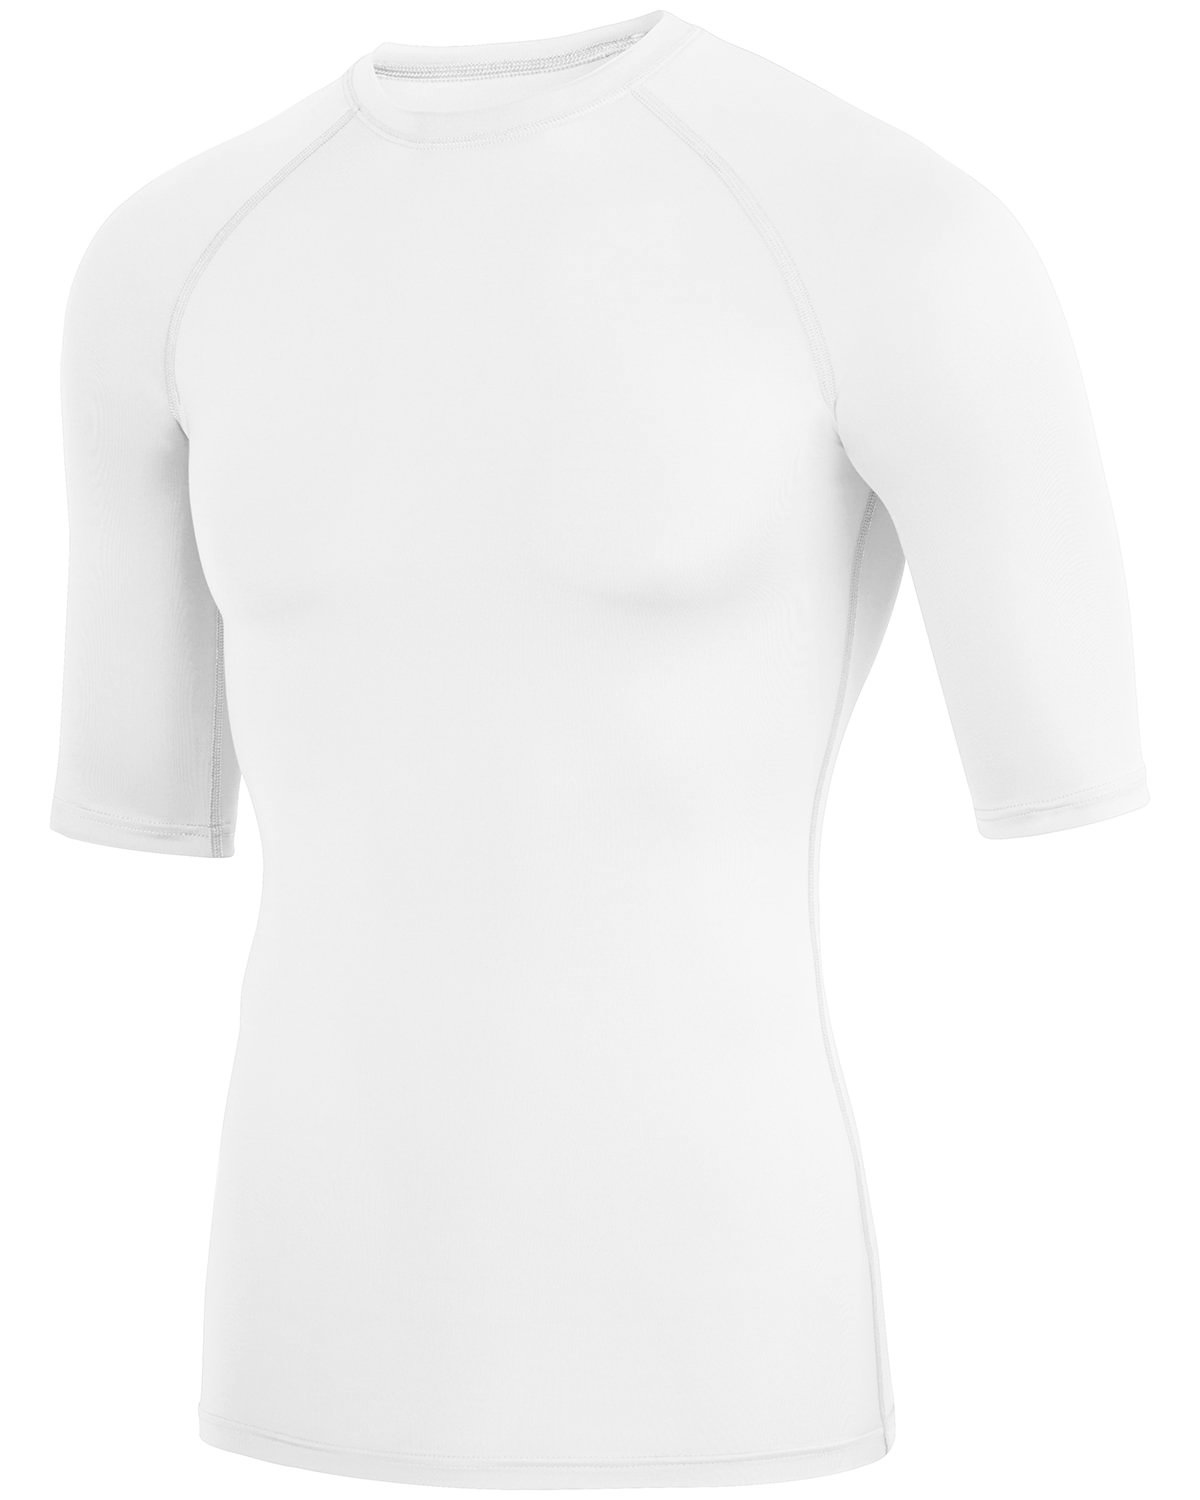 Champro Lightning Half Sleeve Compression Shirt – Tuffy Brooks Sporting  Goods